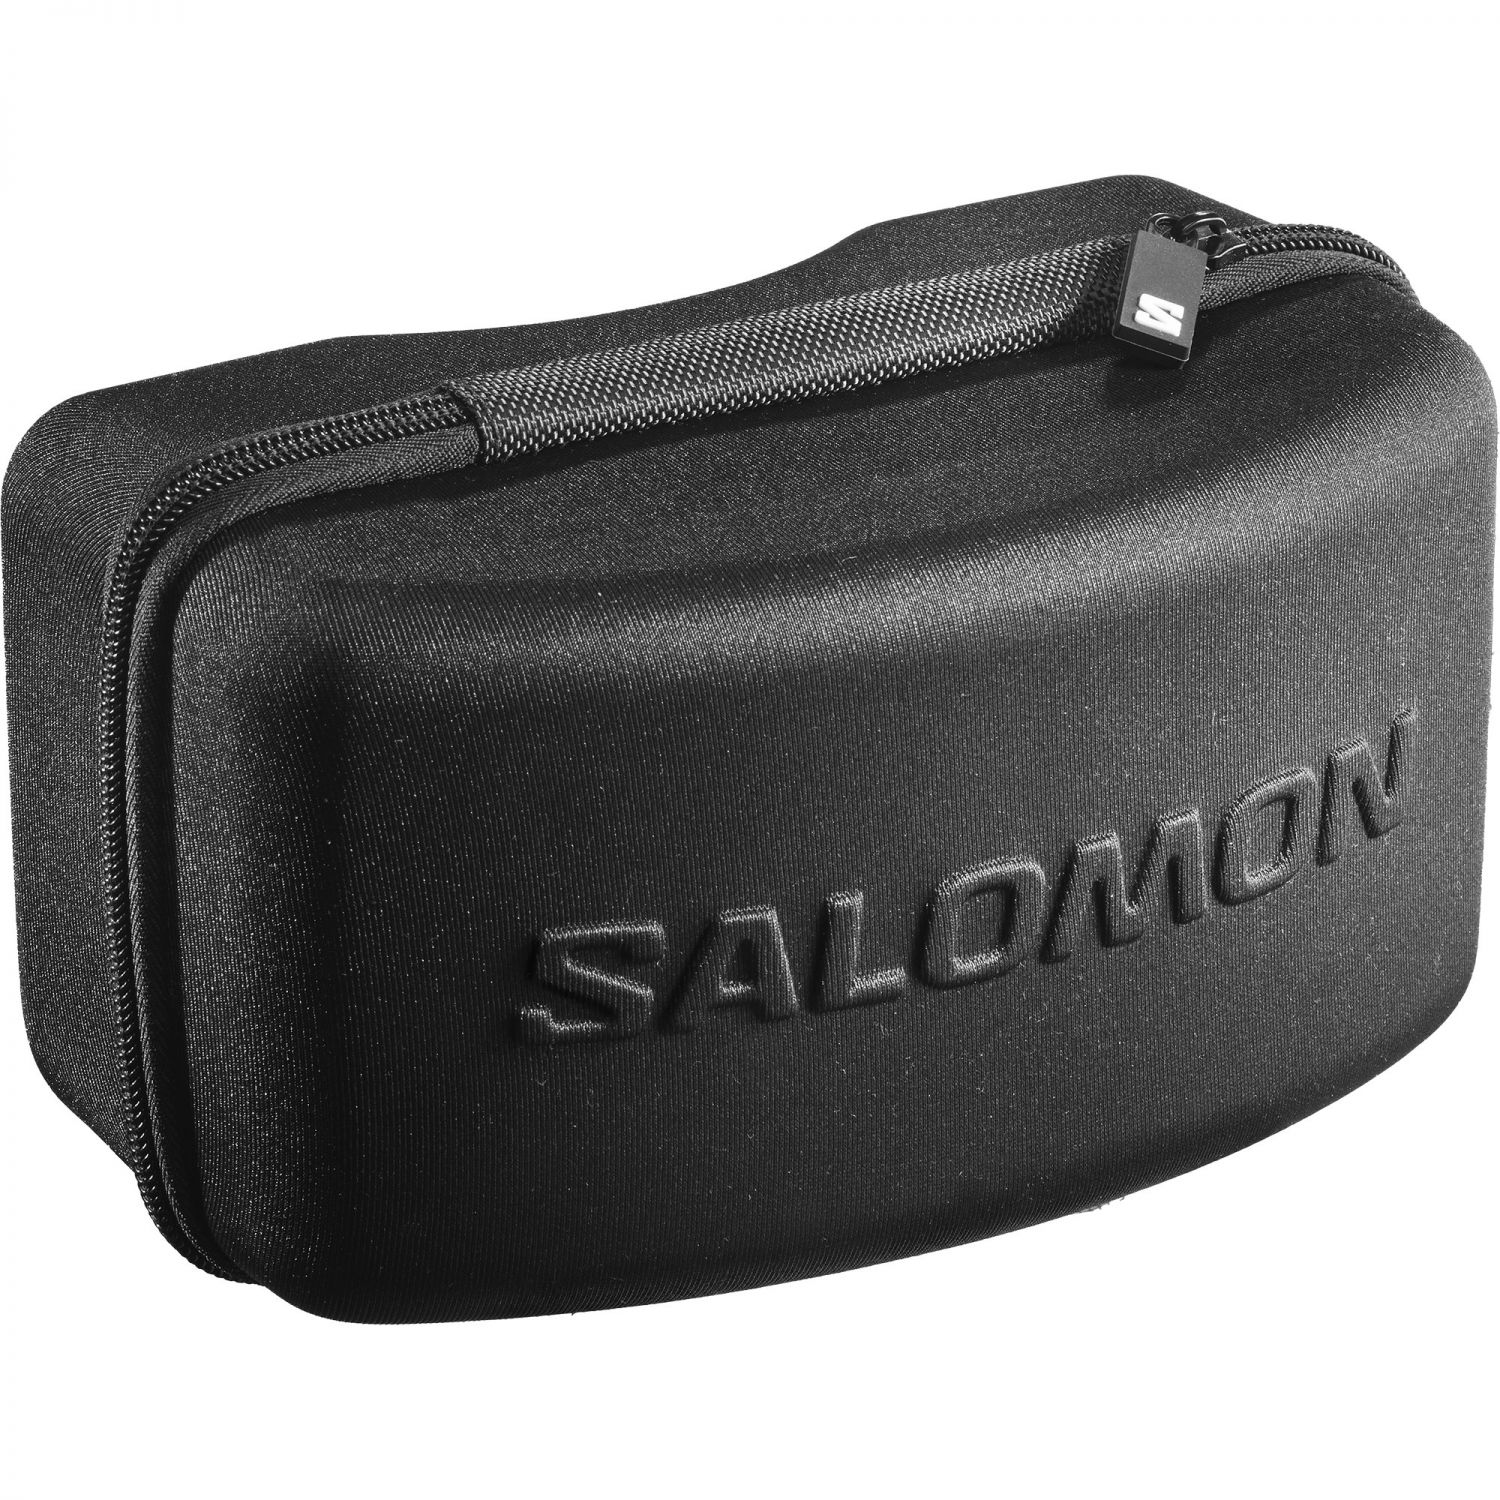 Salomon Sentry Pro Sigma, masque de ski, turquoise